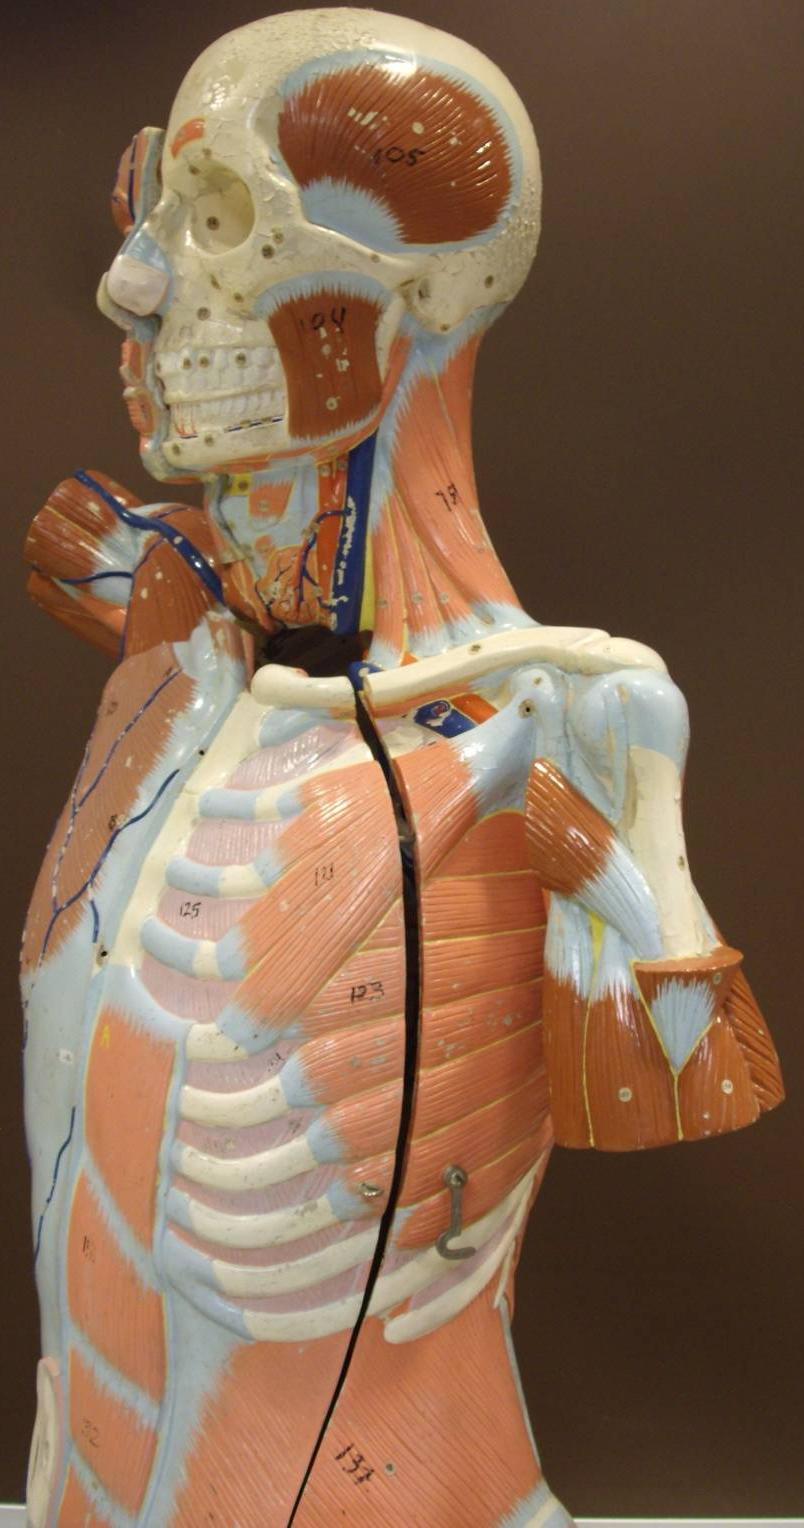 Human Muscles (Lateral View) Model 3-44 Temporalis Masseter Levator Scapula Pectoralis Major